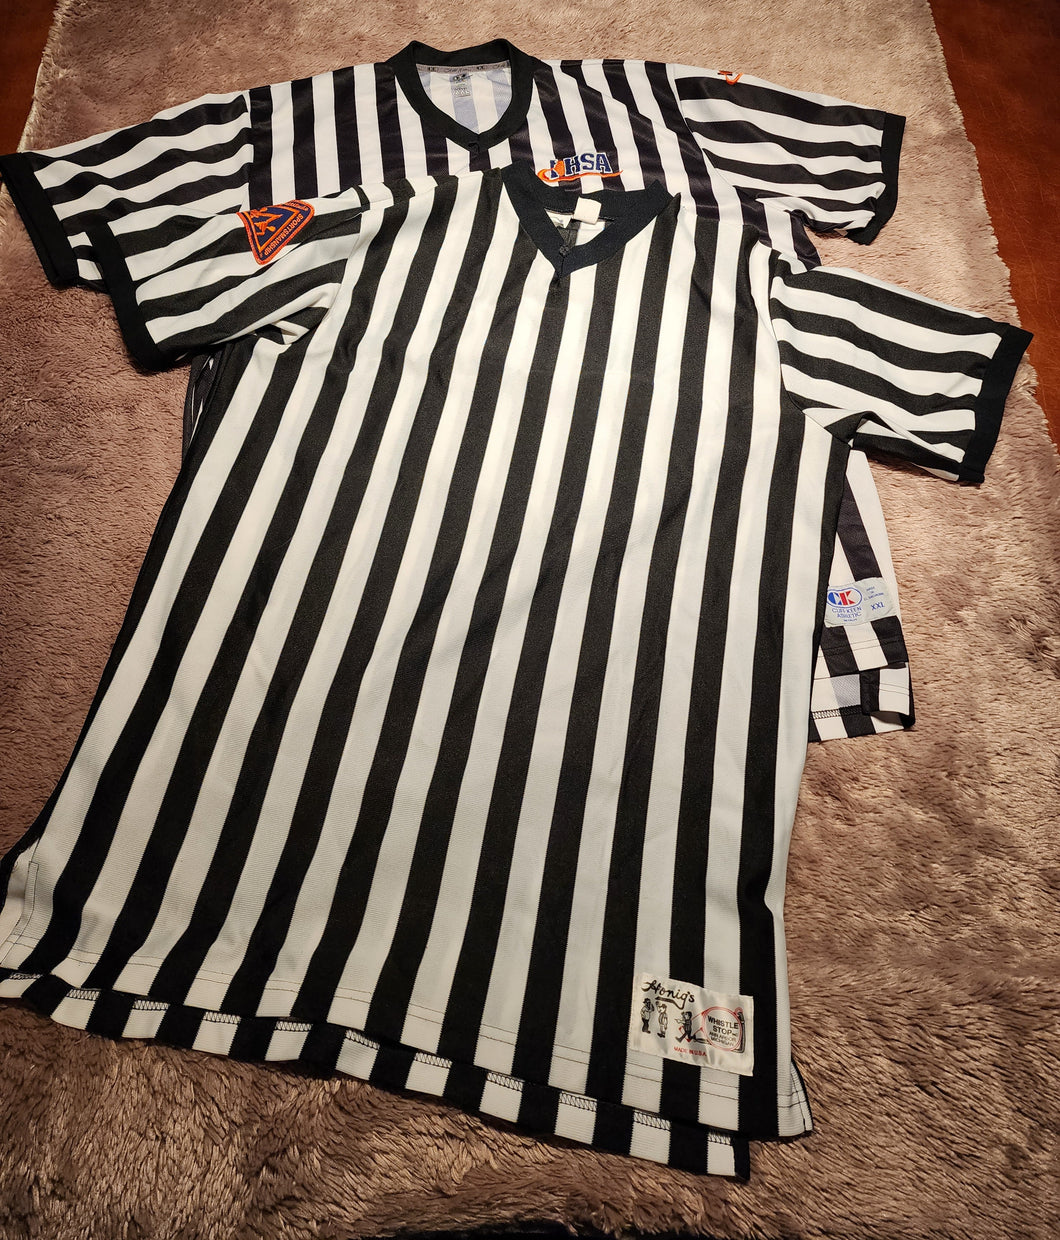 Lot of 2 referee shirts, size XL and XXL Adult XL